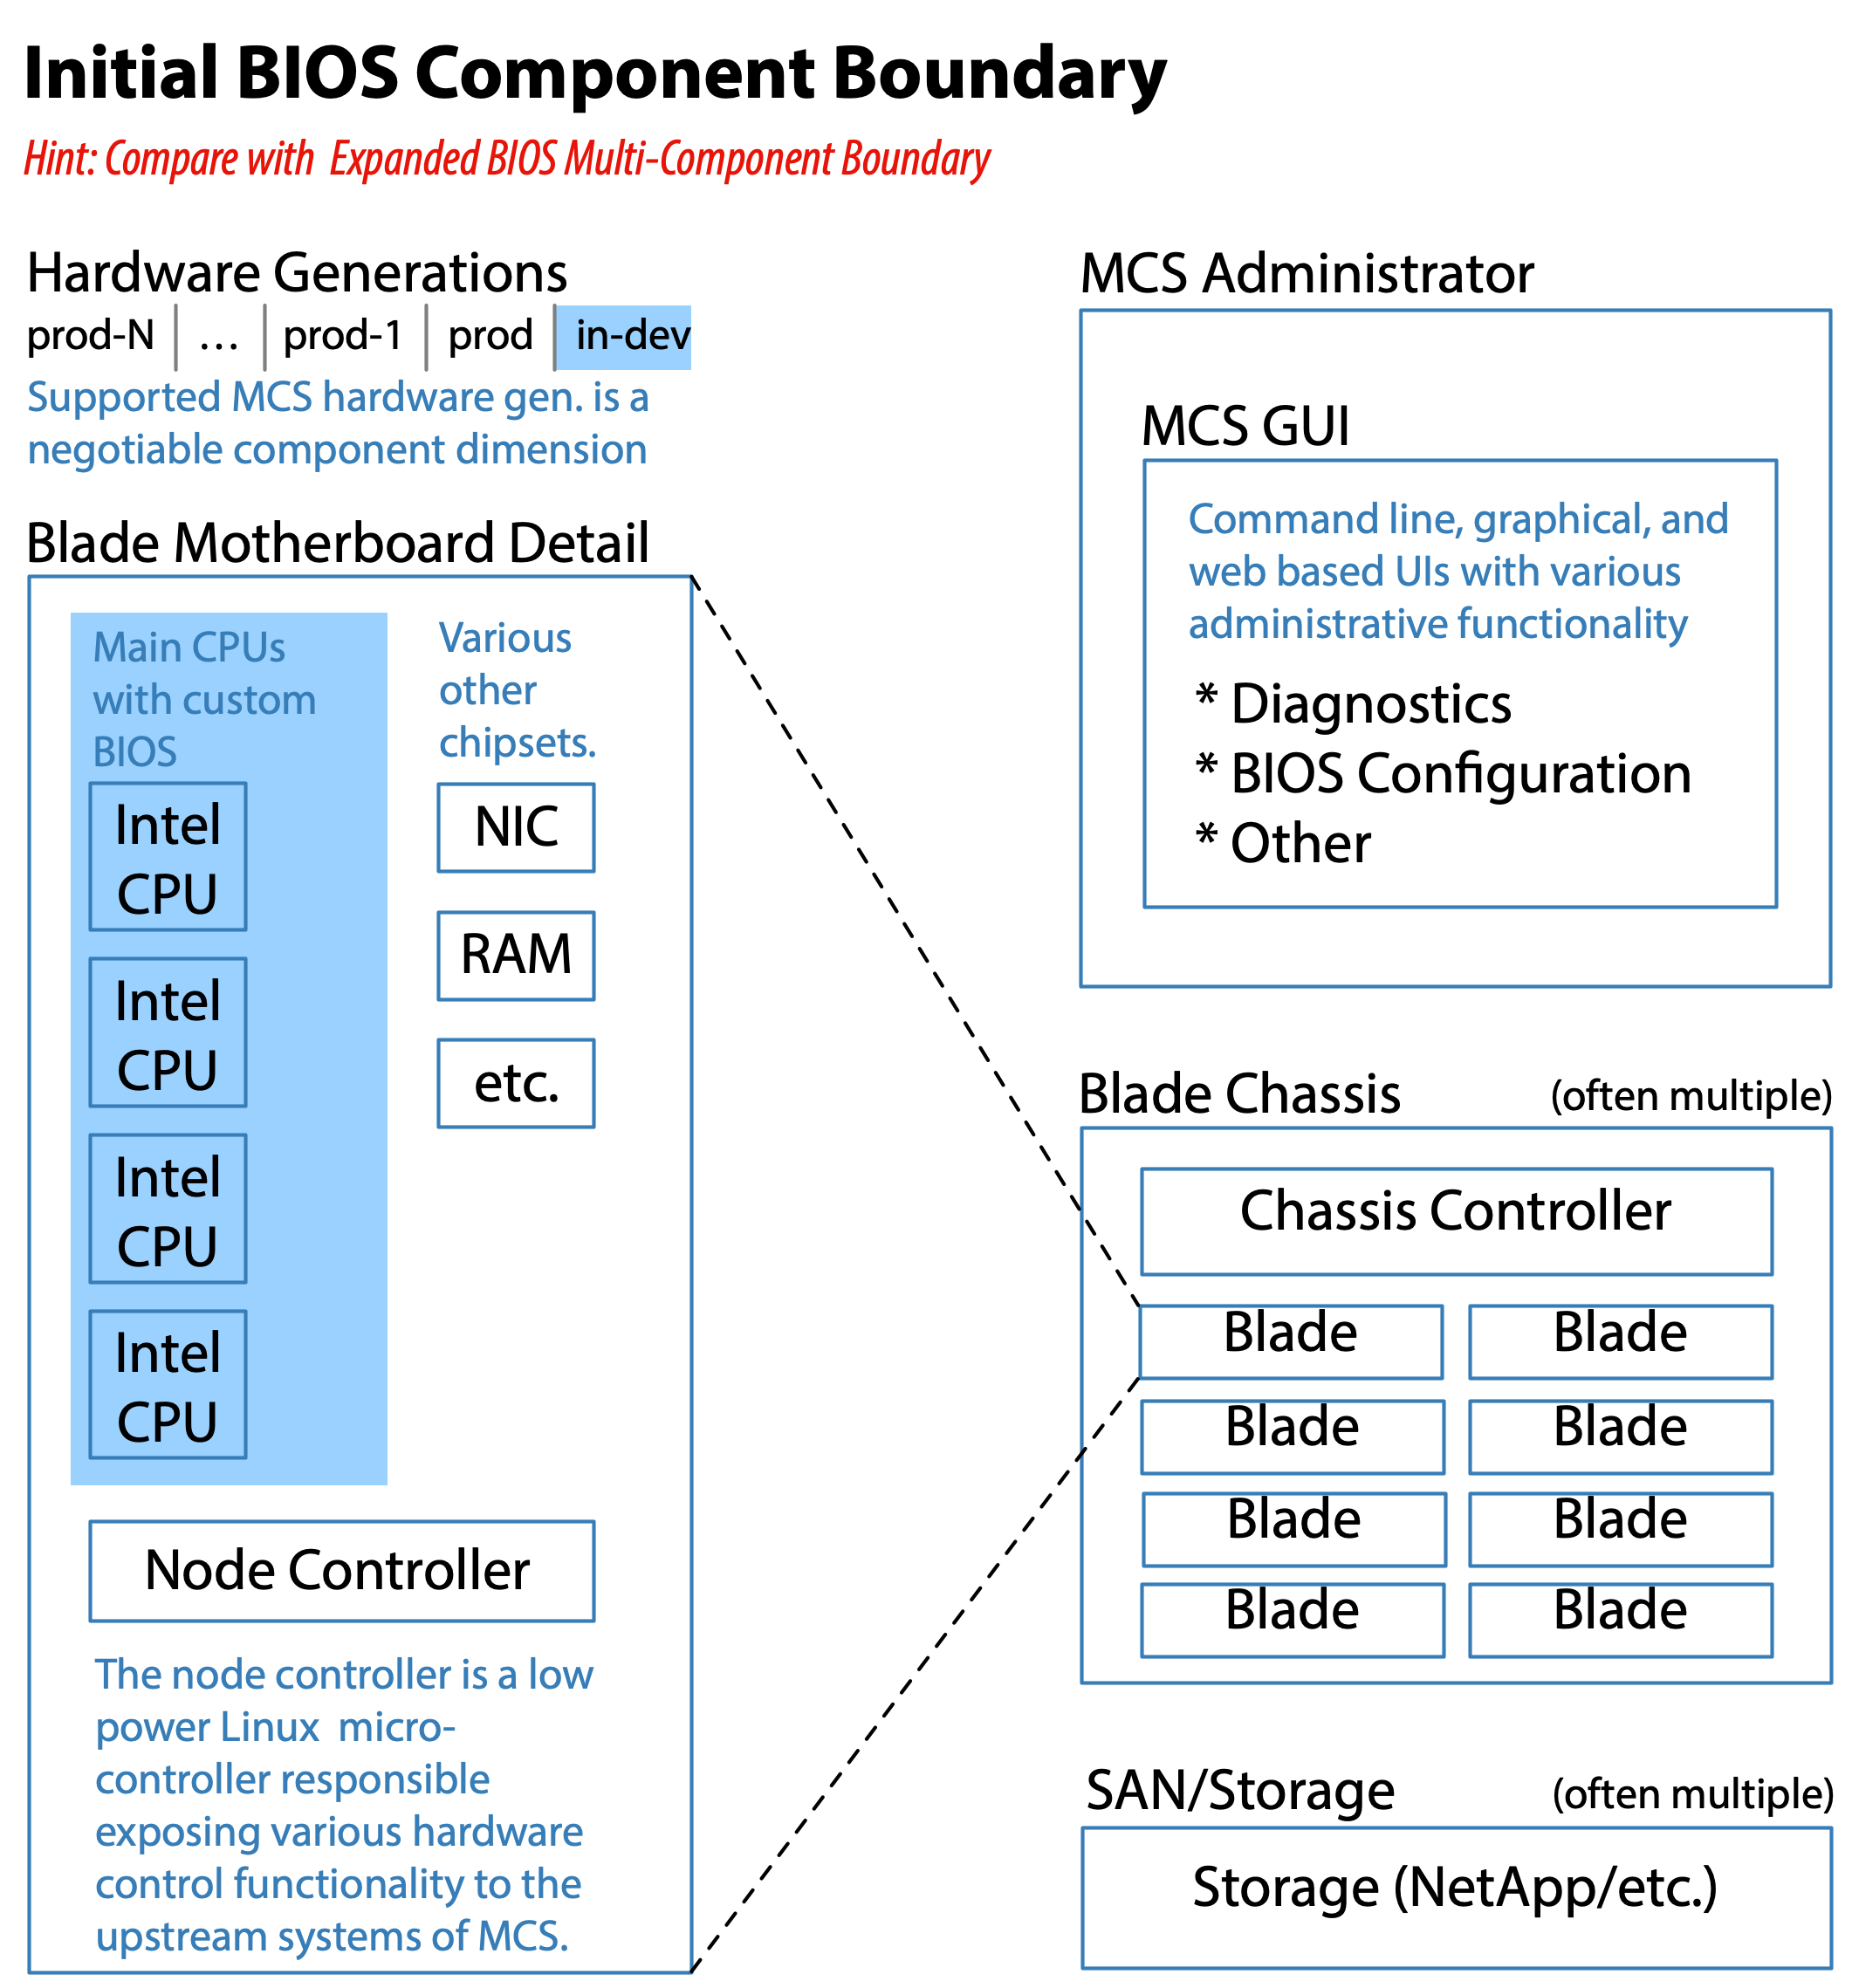 Initial BIOS Component Boundary